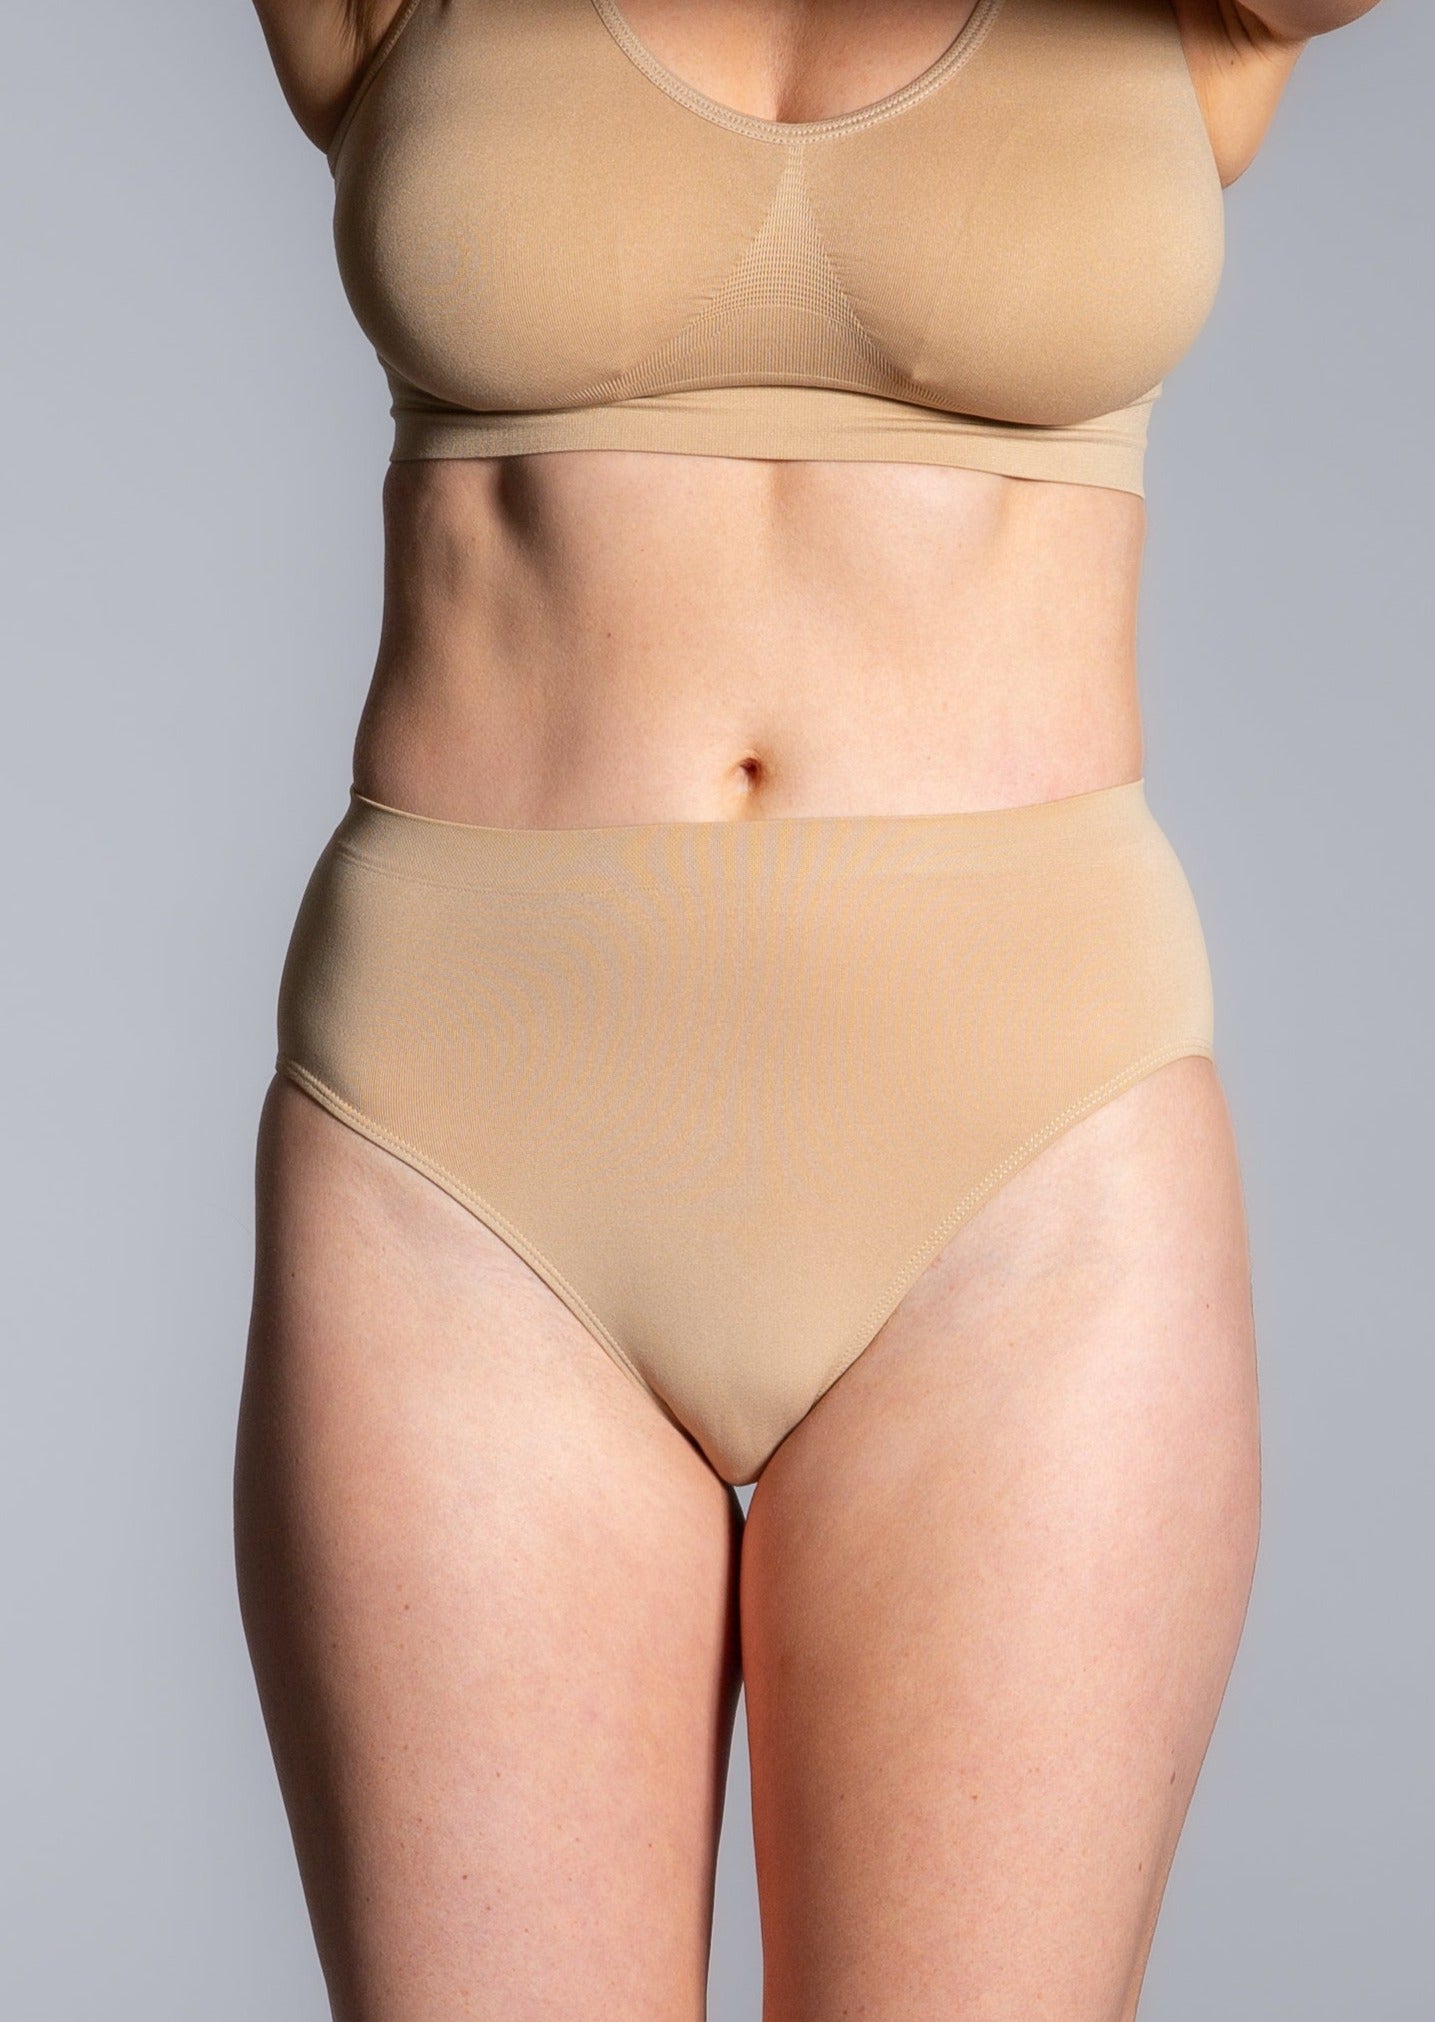 Cotton Bikini Underwear for Women,Seamless Panties Qatar